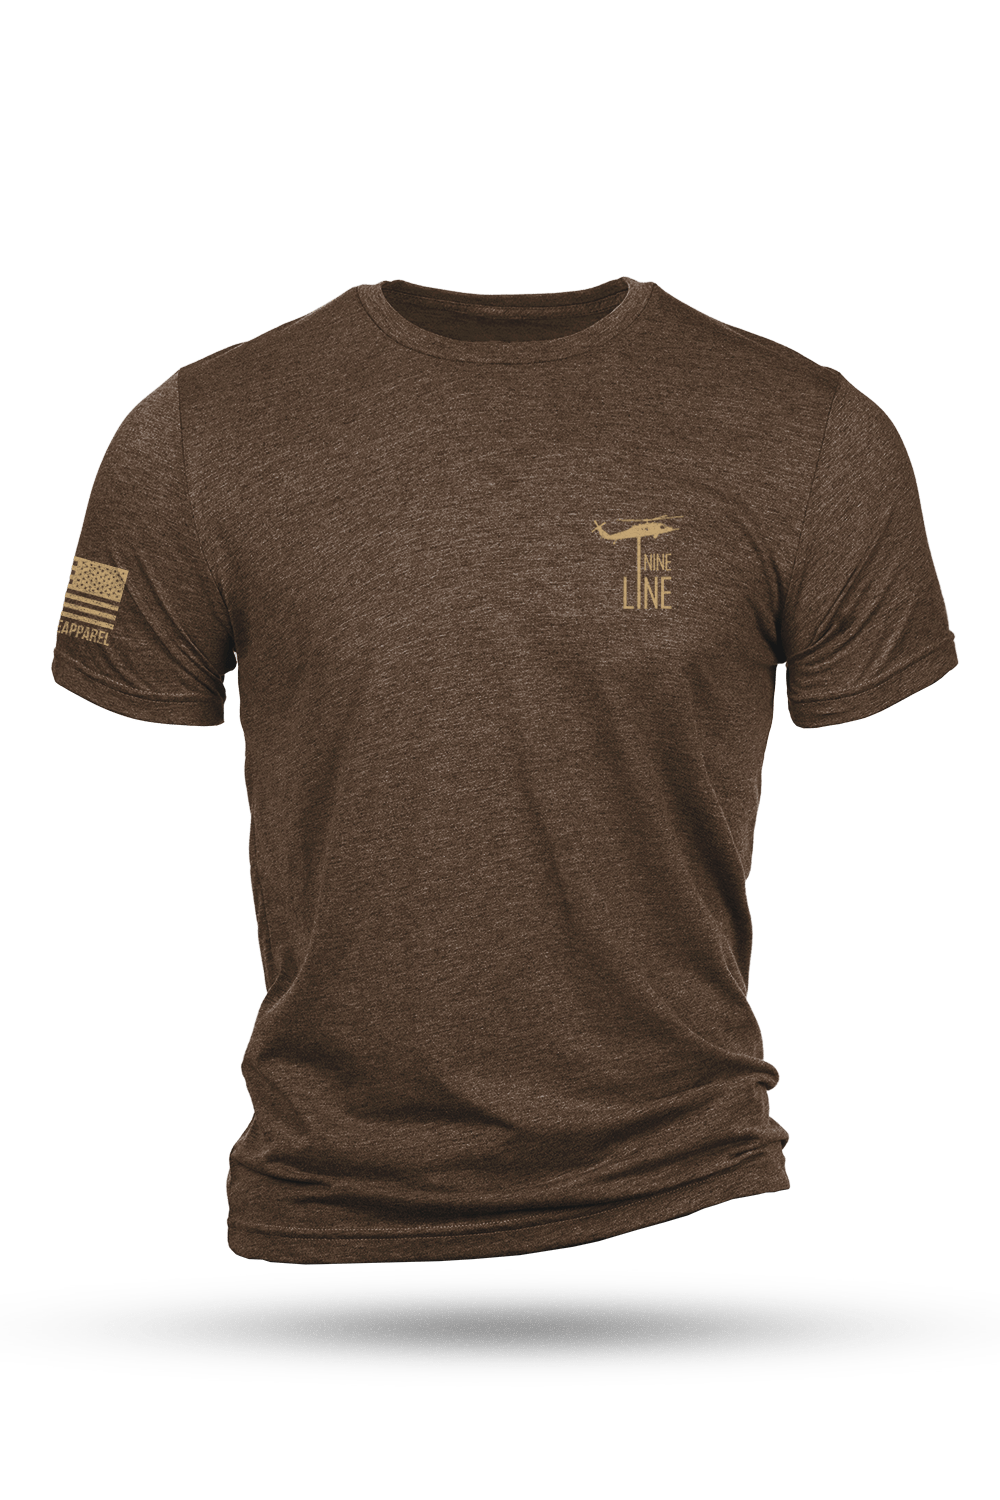 Tri-Blend T-Shirt - BASICTAN - Nine Line Apparel